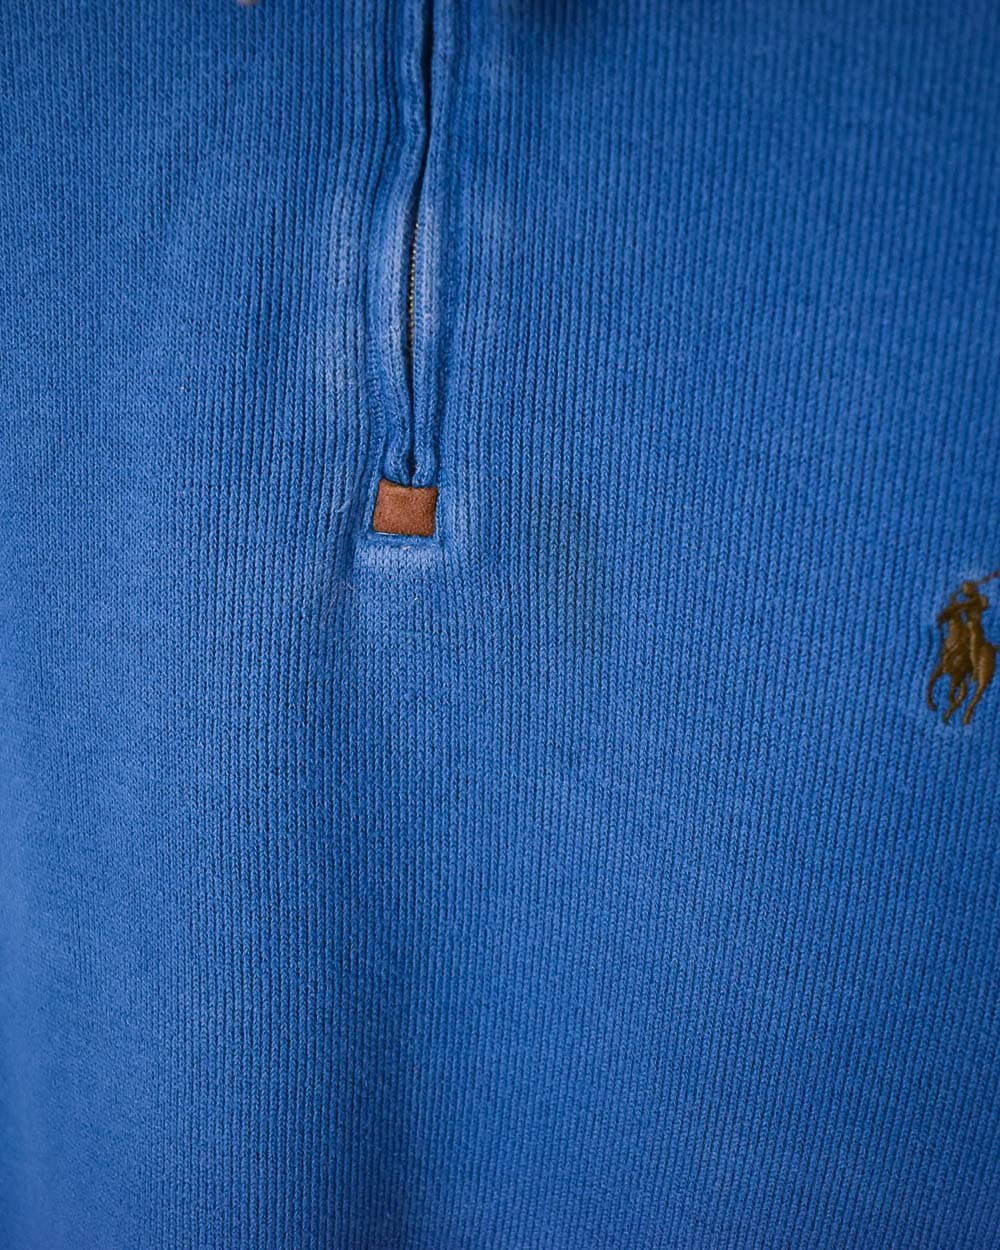 Ralph Lauren 1/4 Zip Sweatshirt - Medium - Domno Vintage 90s, 80s, 00s Retro and Vintage Clothing 